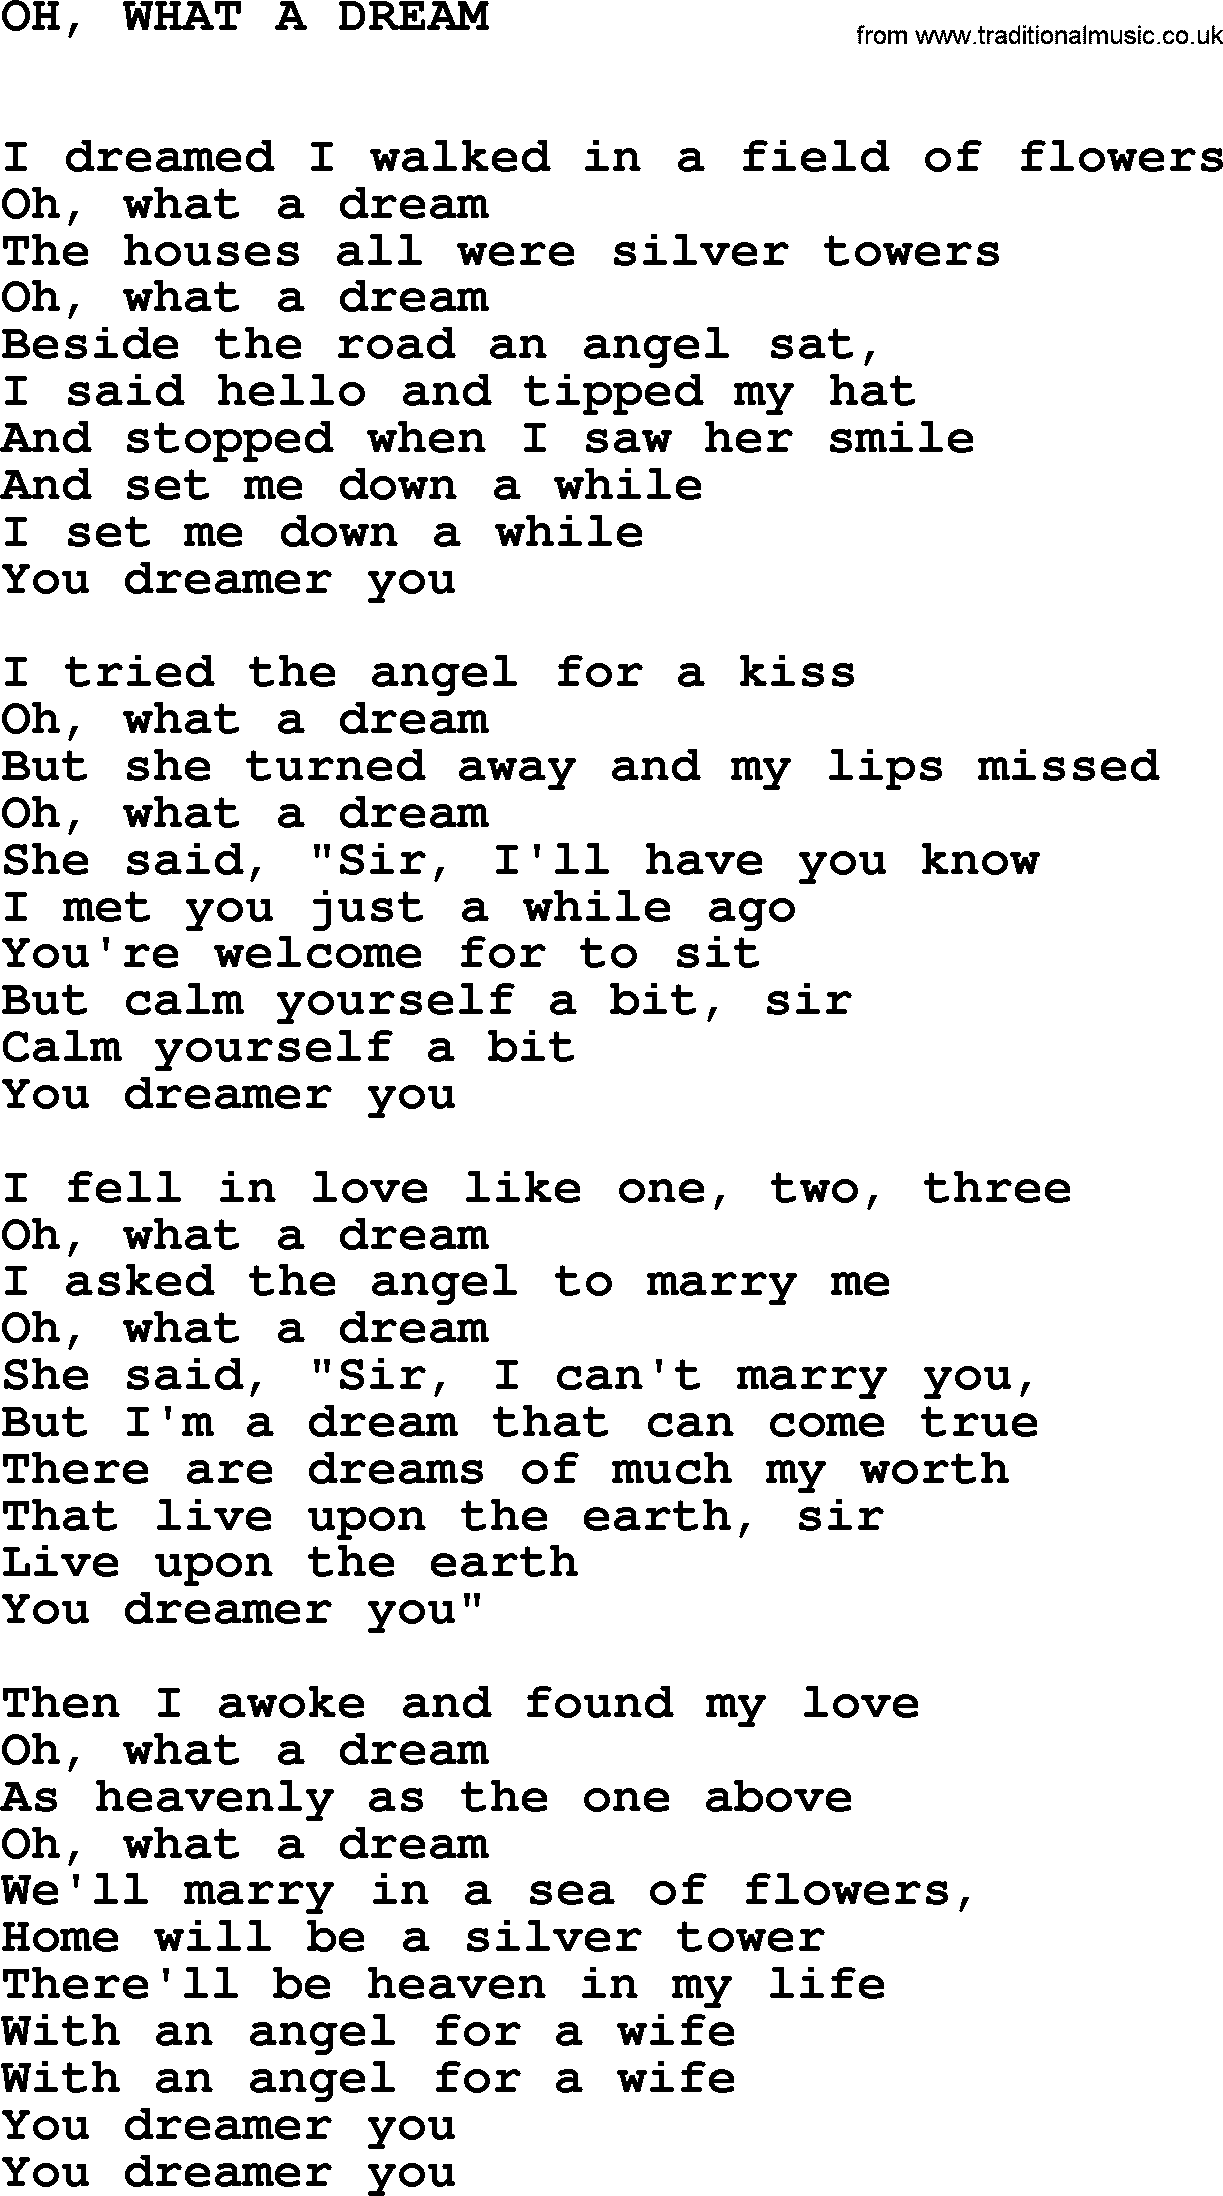 Johnny Cash song Oh, What A Dream.txt lyrics